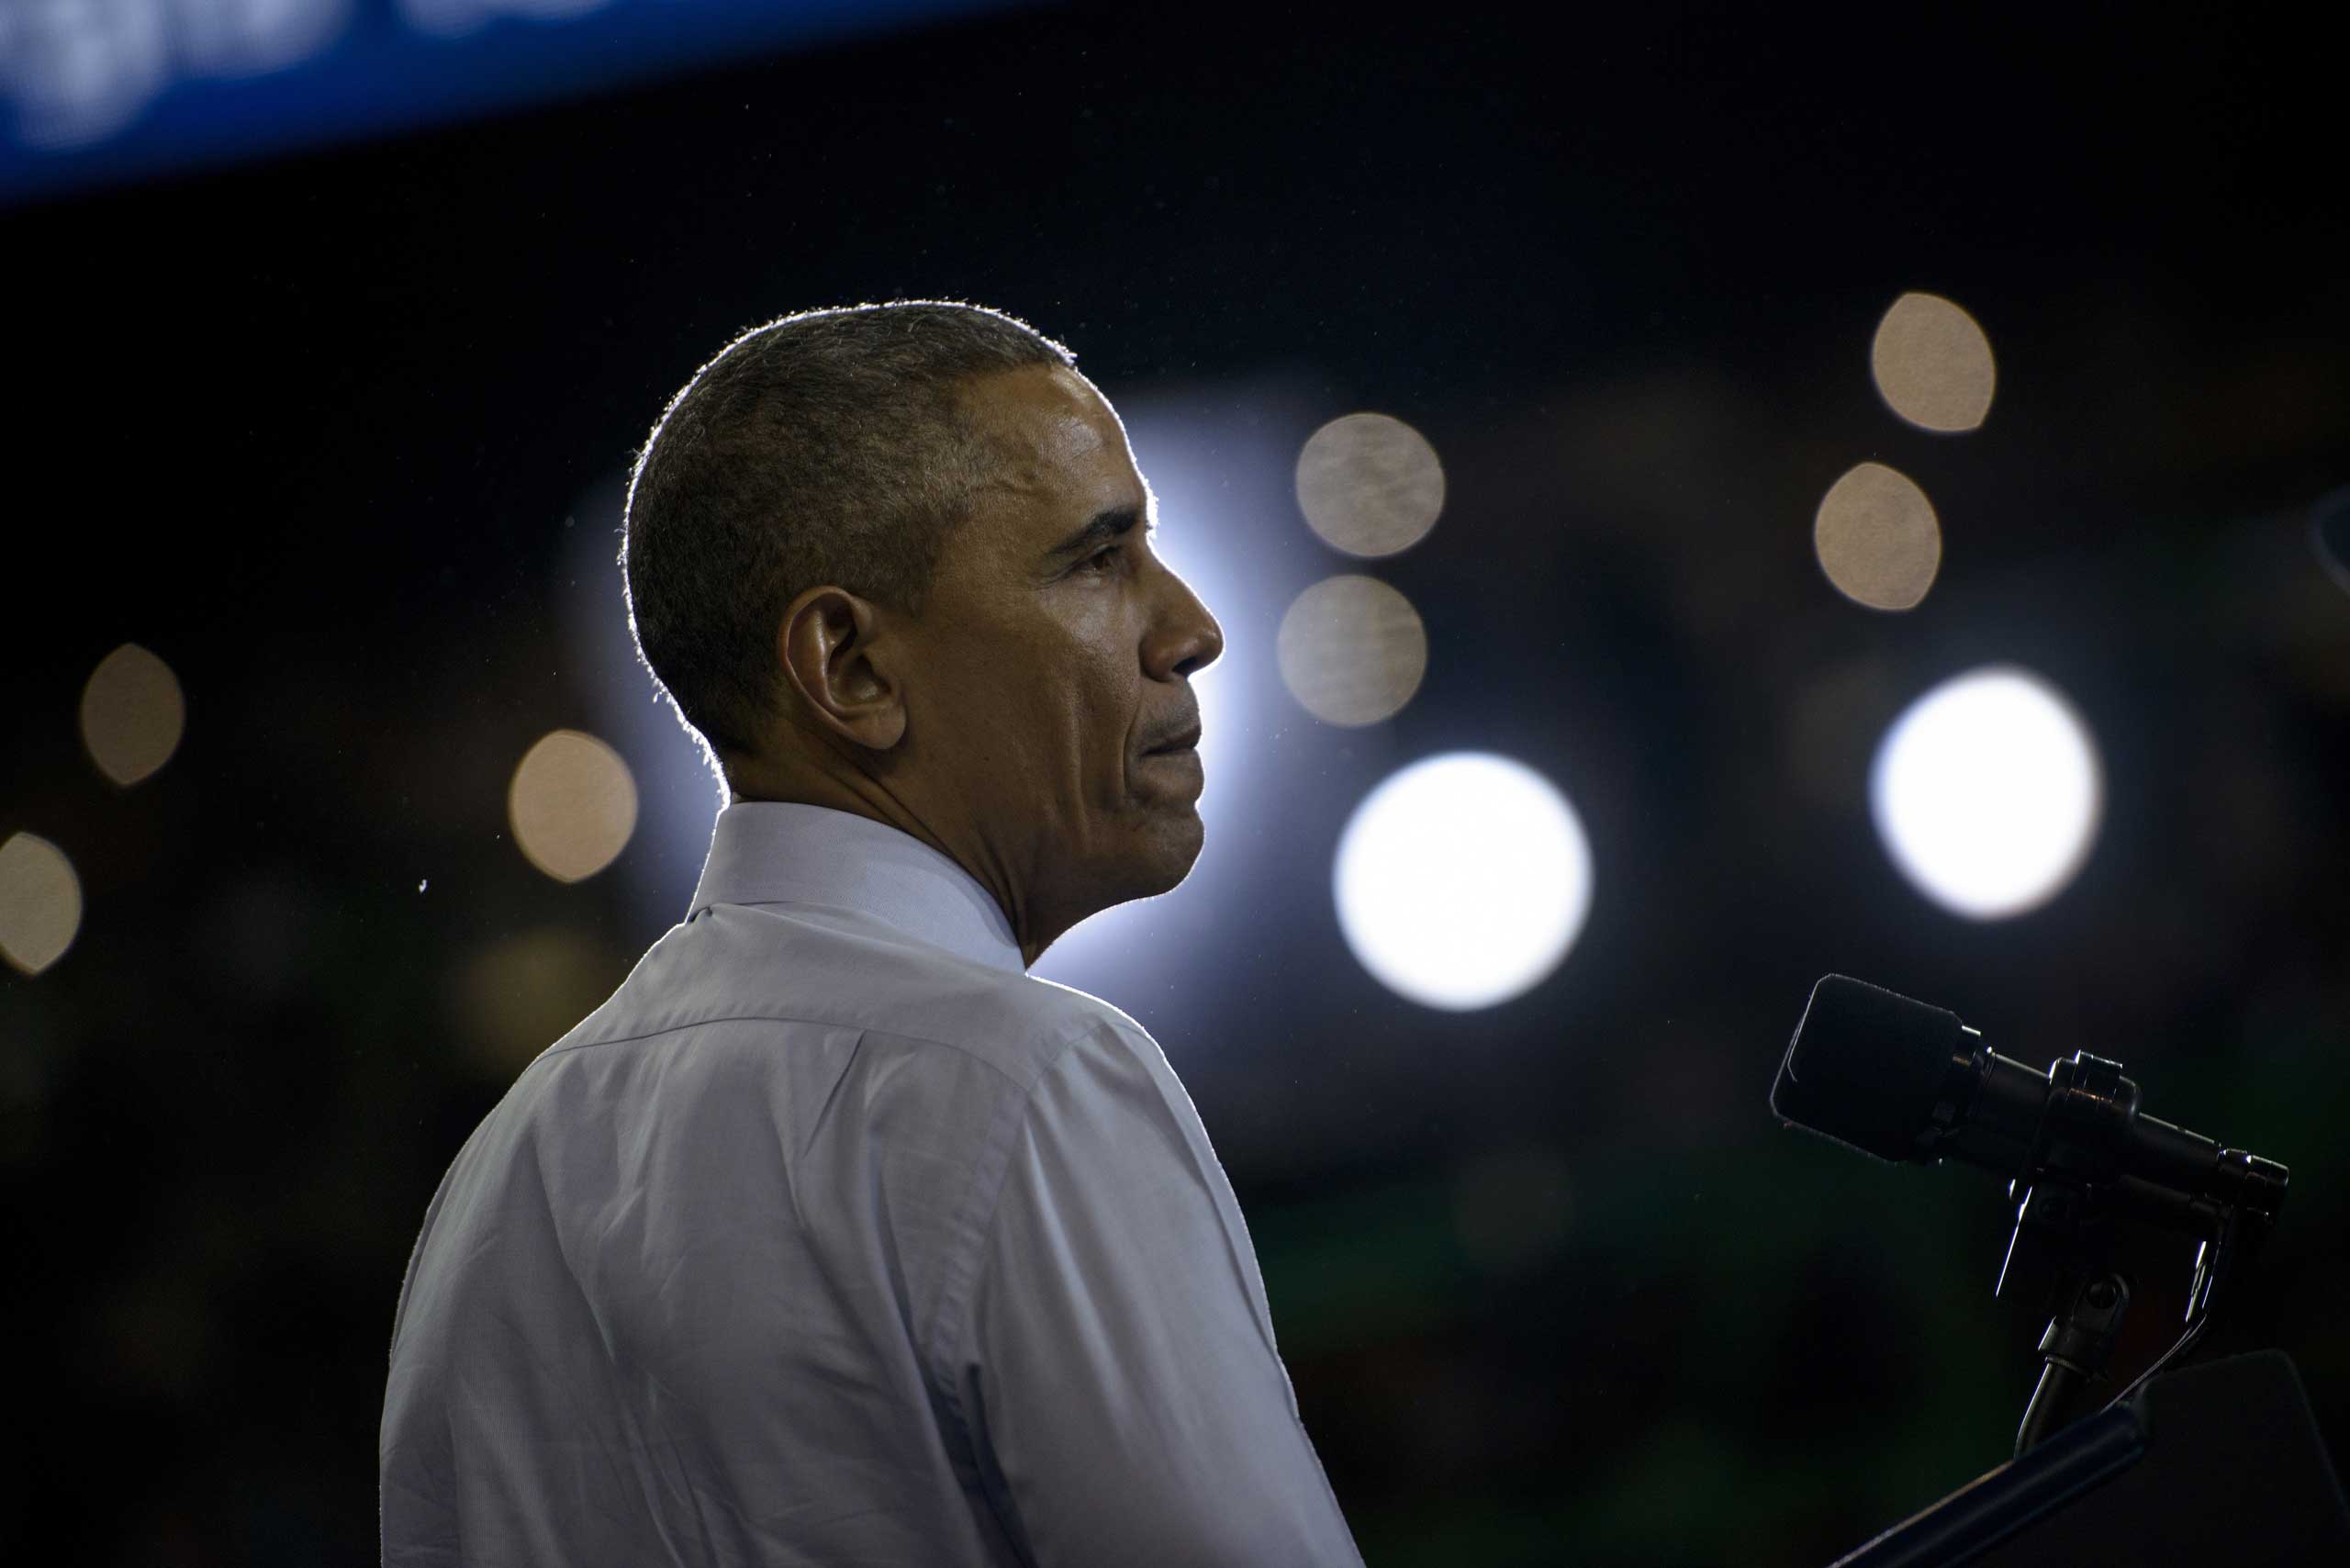 US President Barack Obama pauses while speaking at Georgia Tech on March 10, 2015 in Atlanta, Georgia.